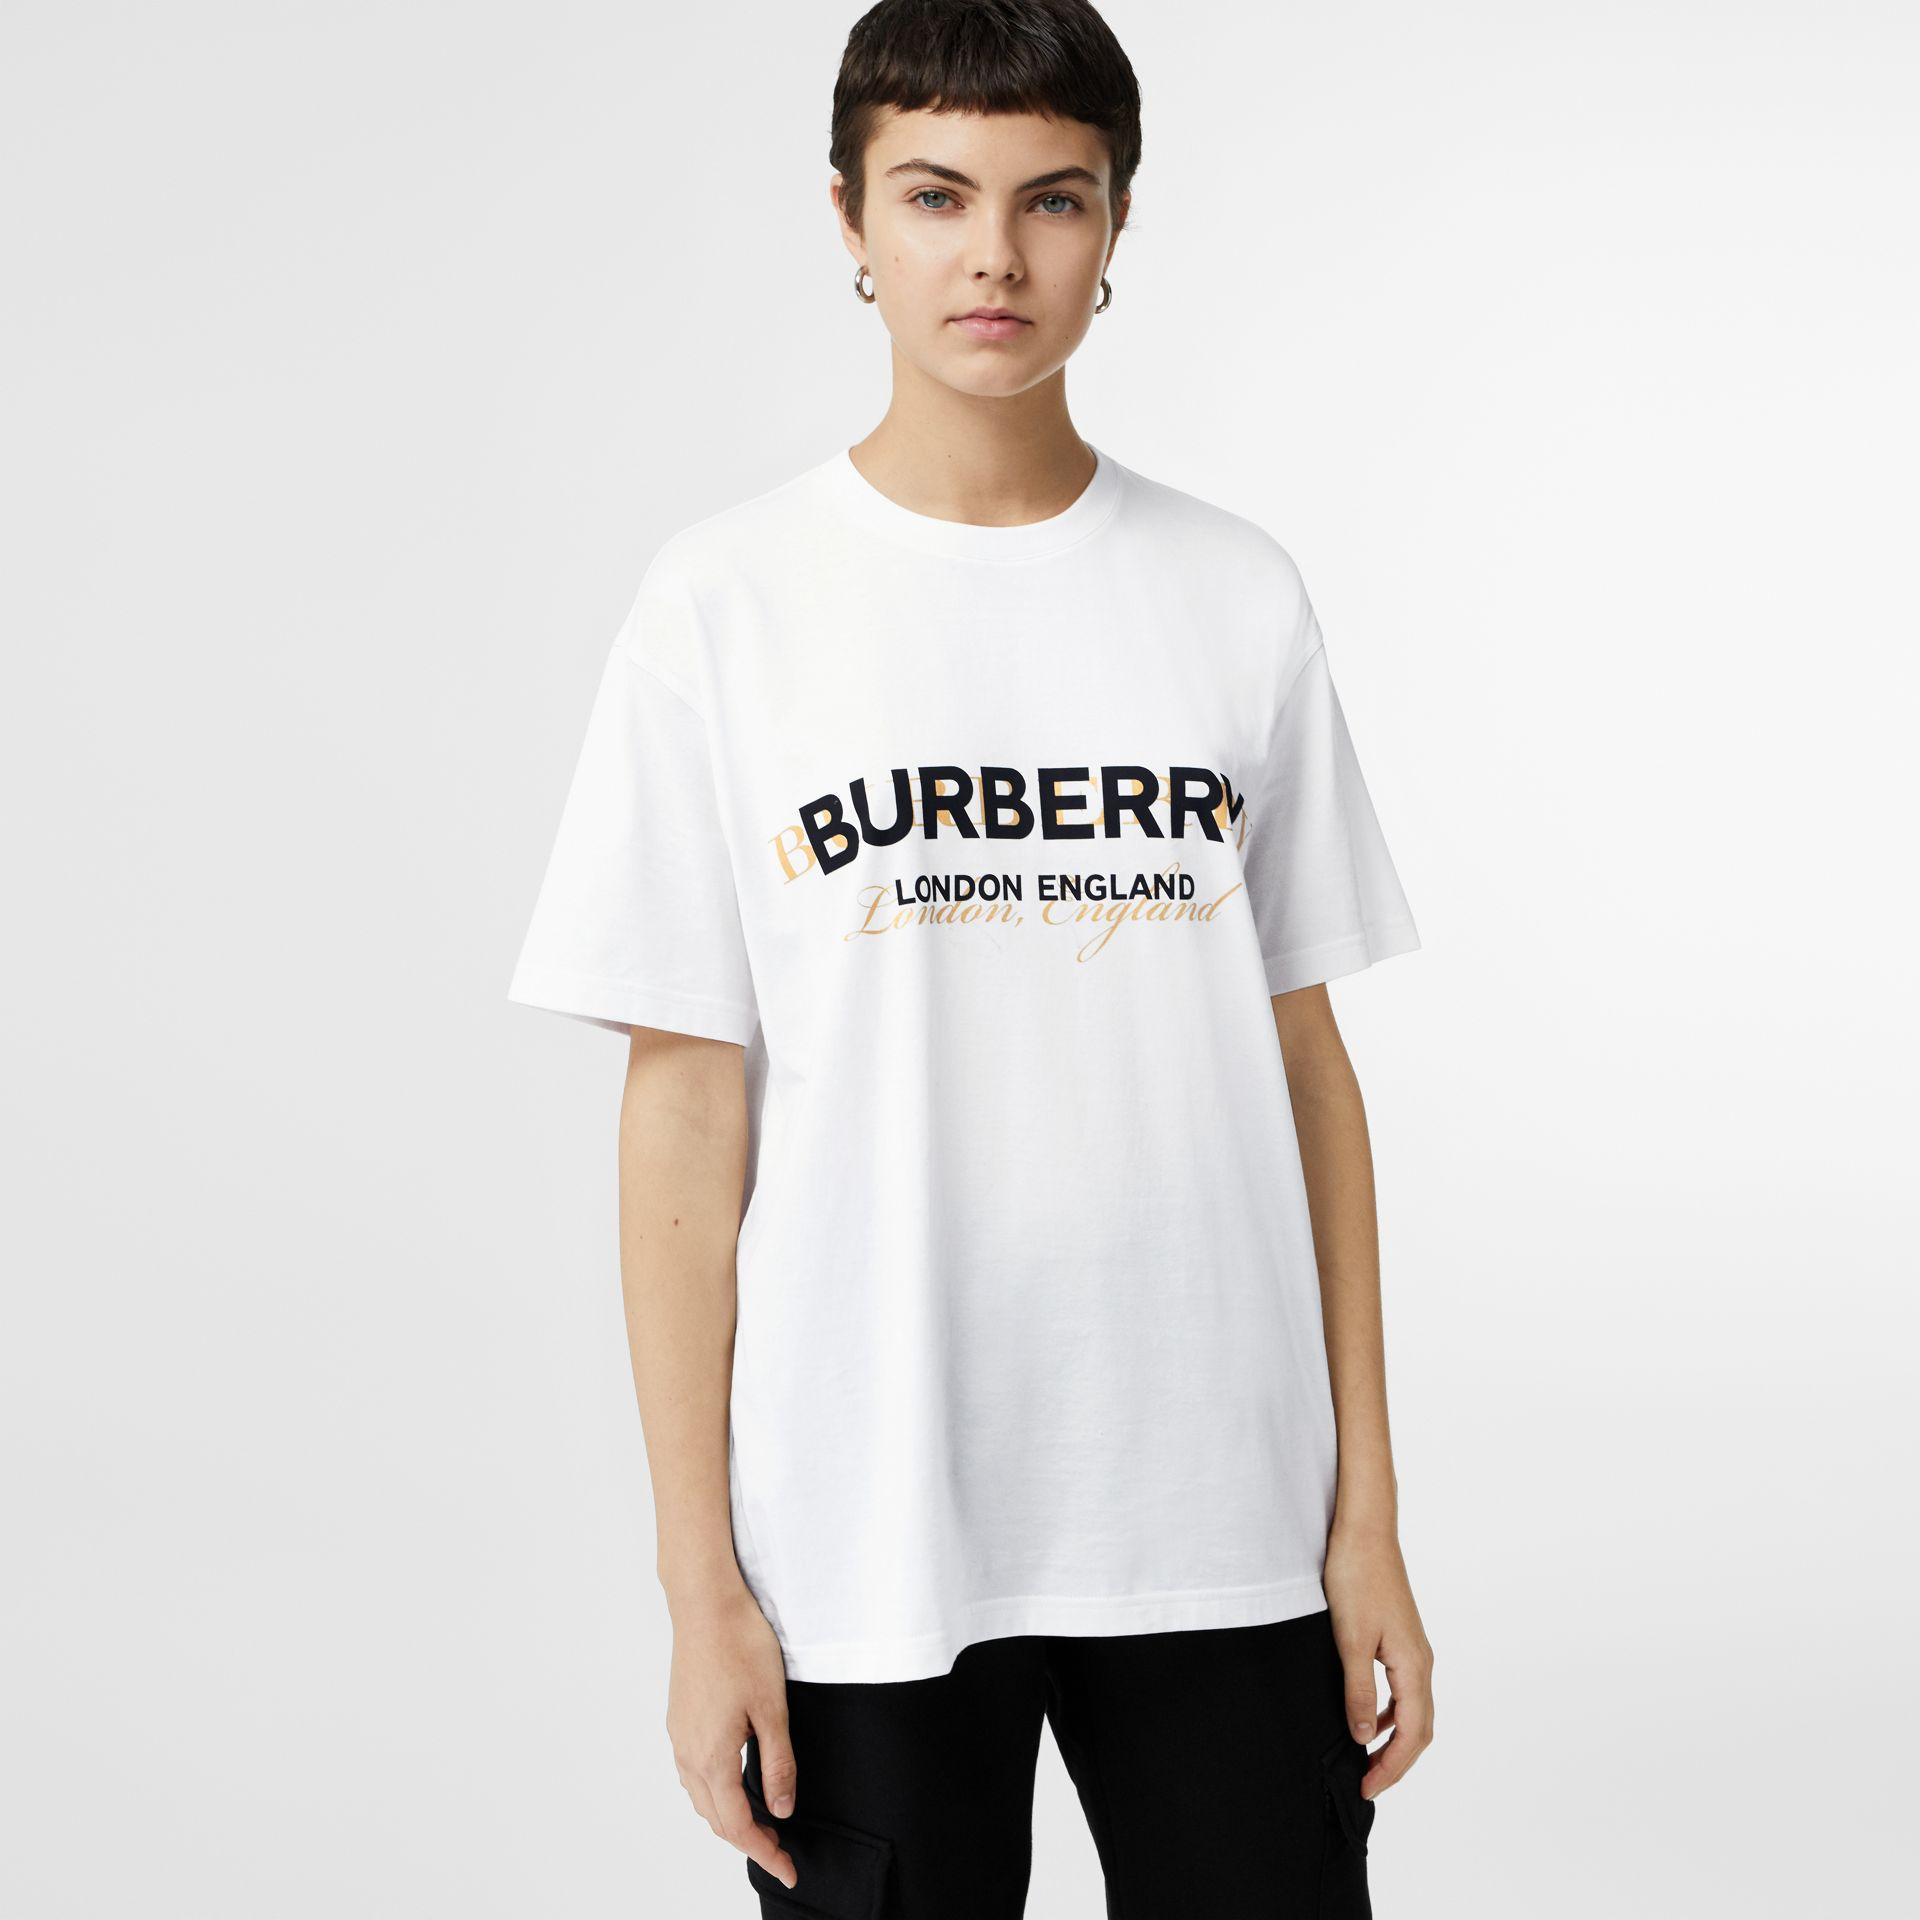 burberry double logo t shirt